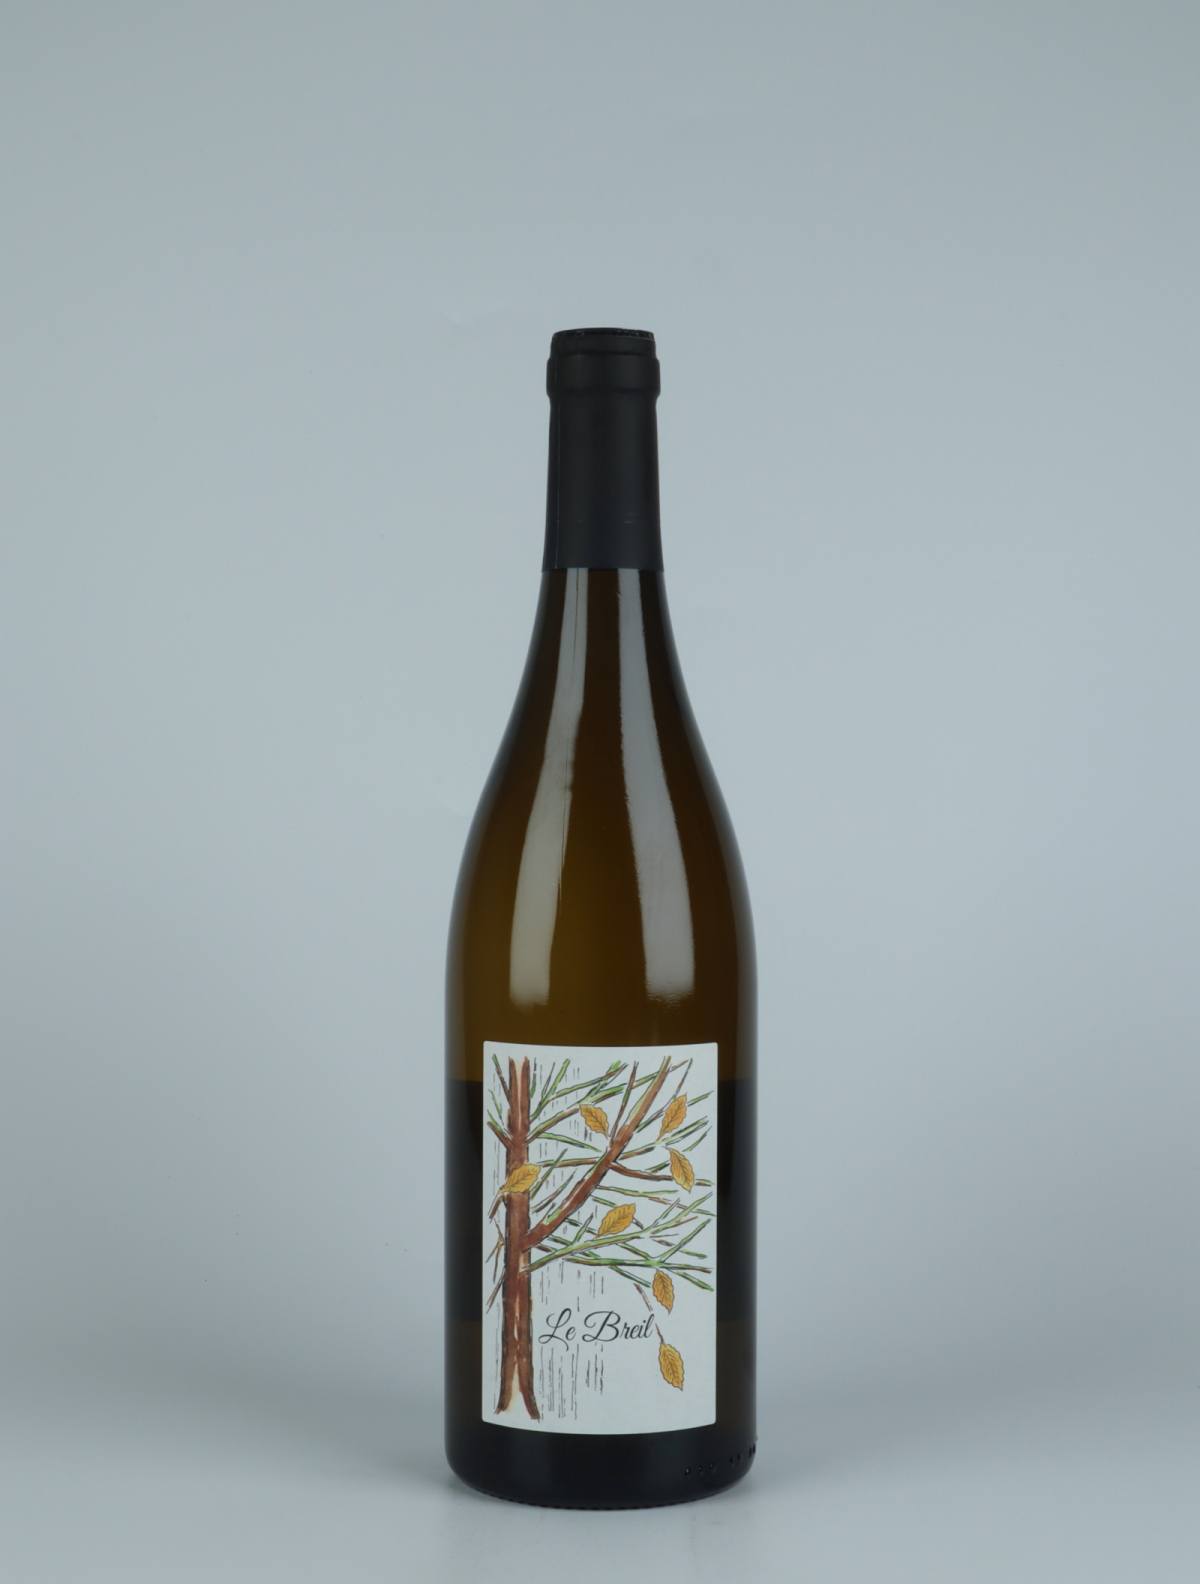 A bottle 2020 Le Breil White wine from Complémen'terre, Loire in France